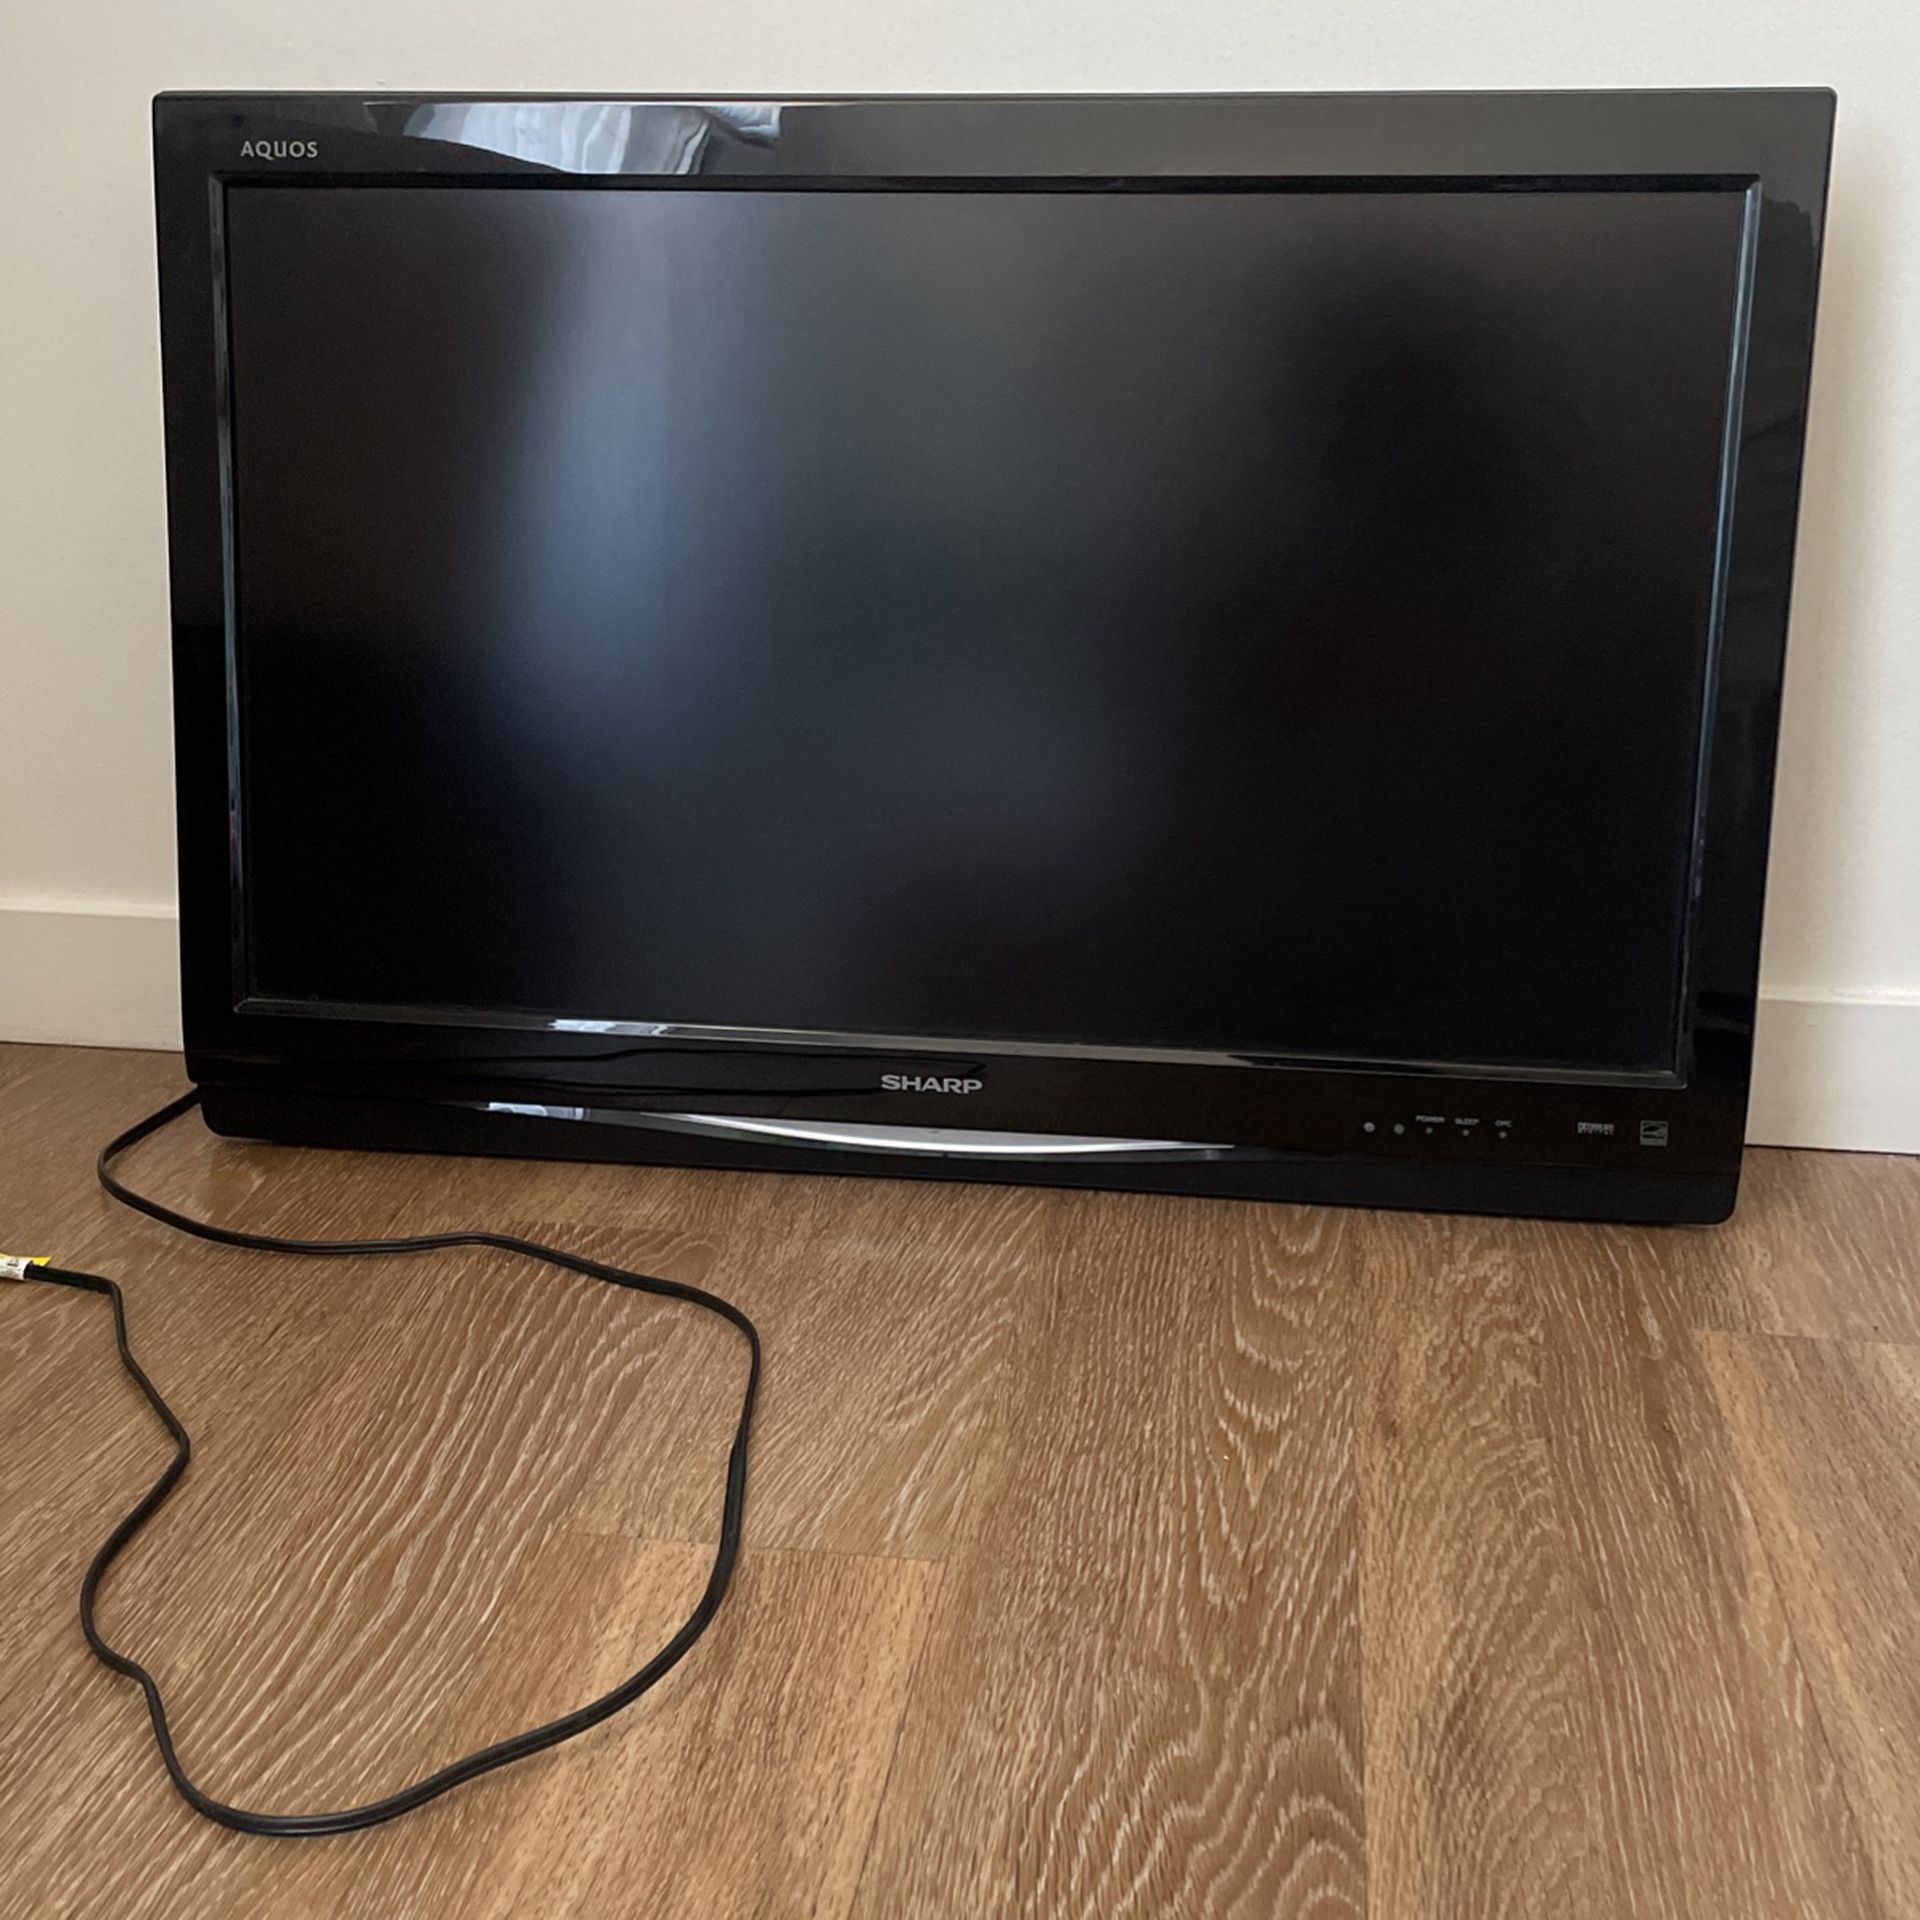 Sharp Aquos 32” LCD HDTV 